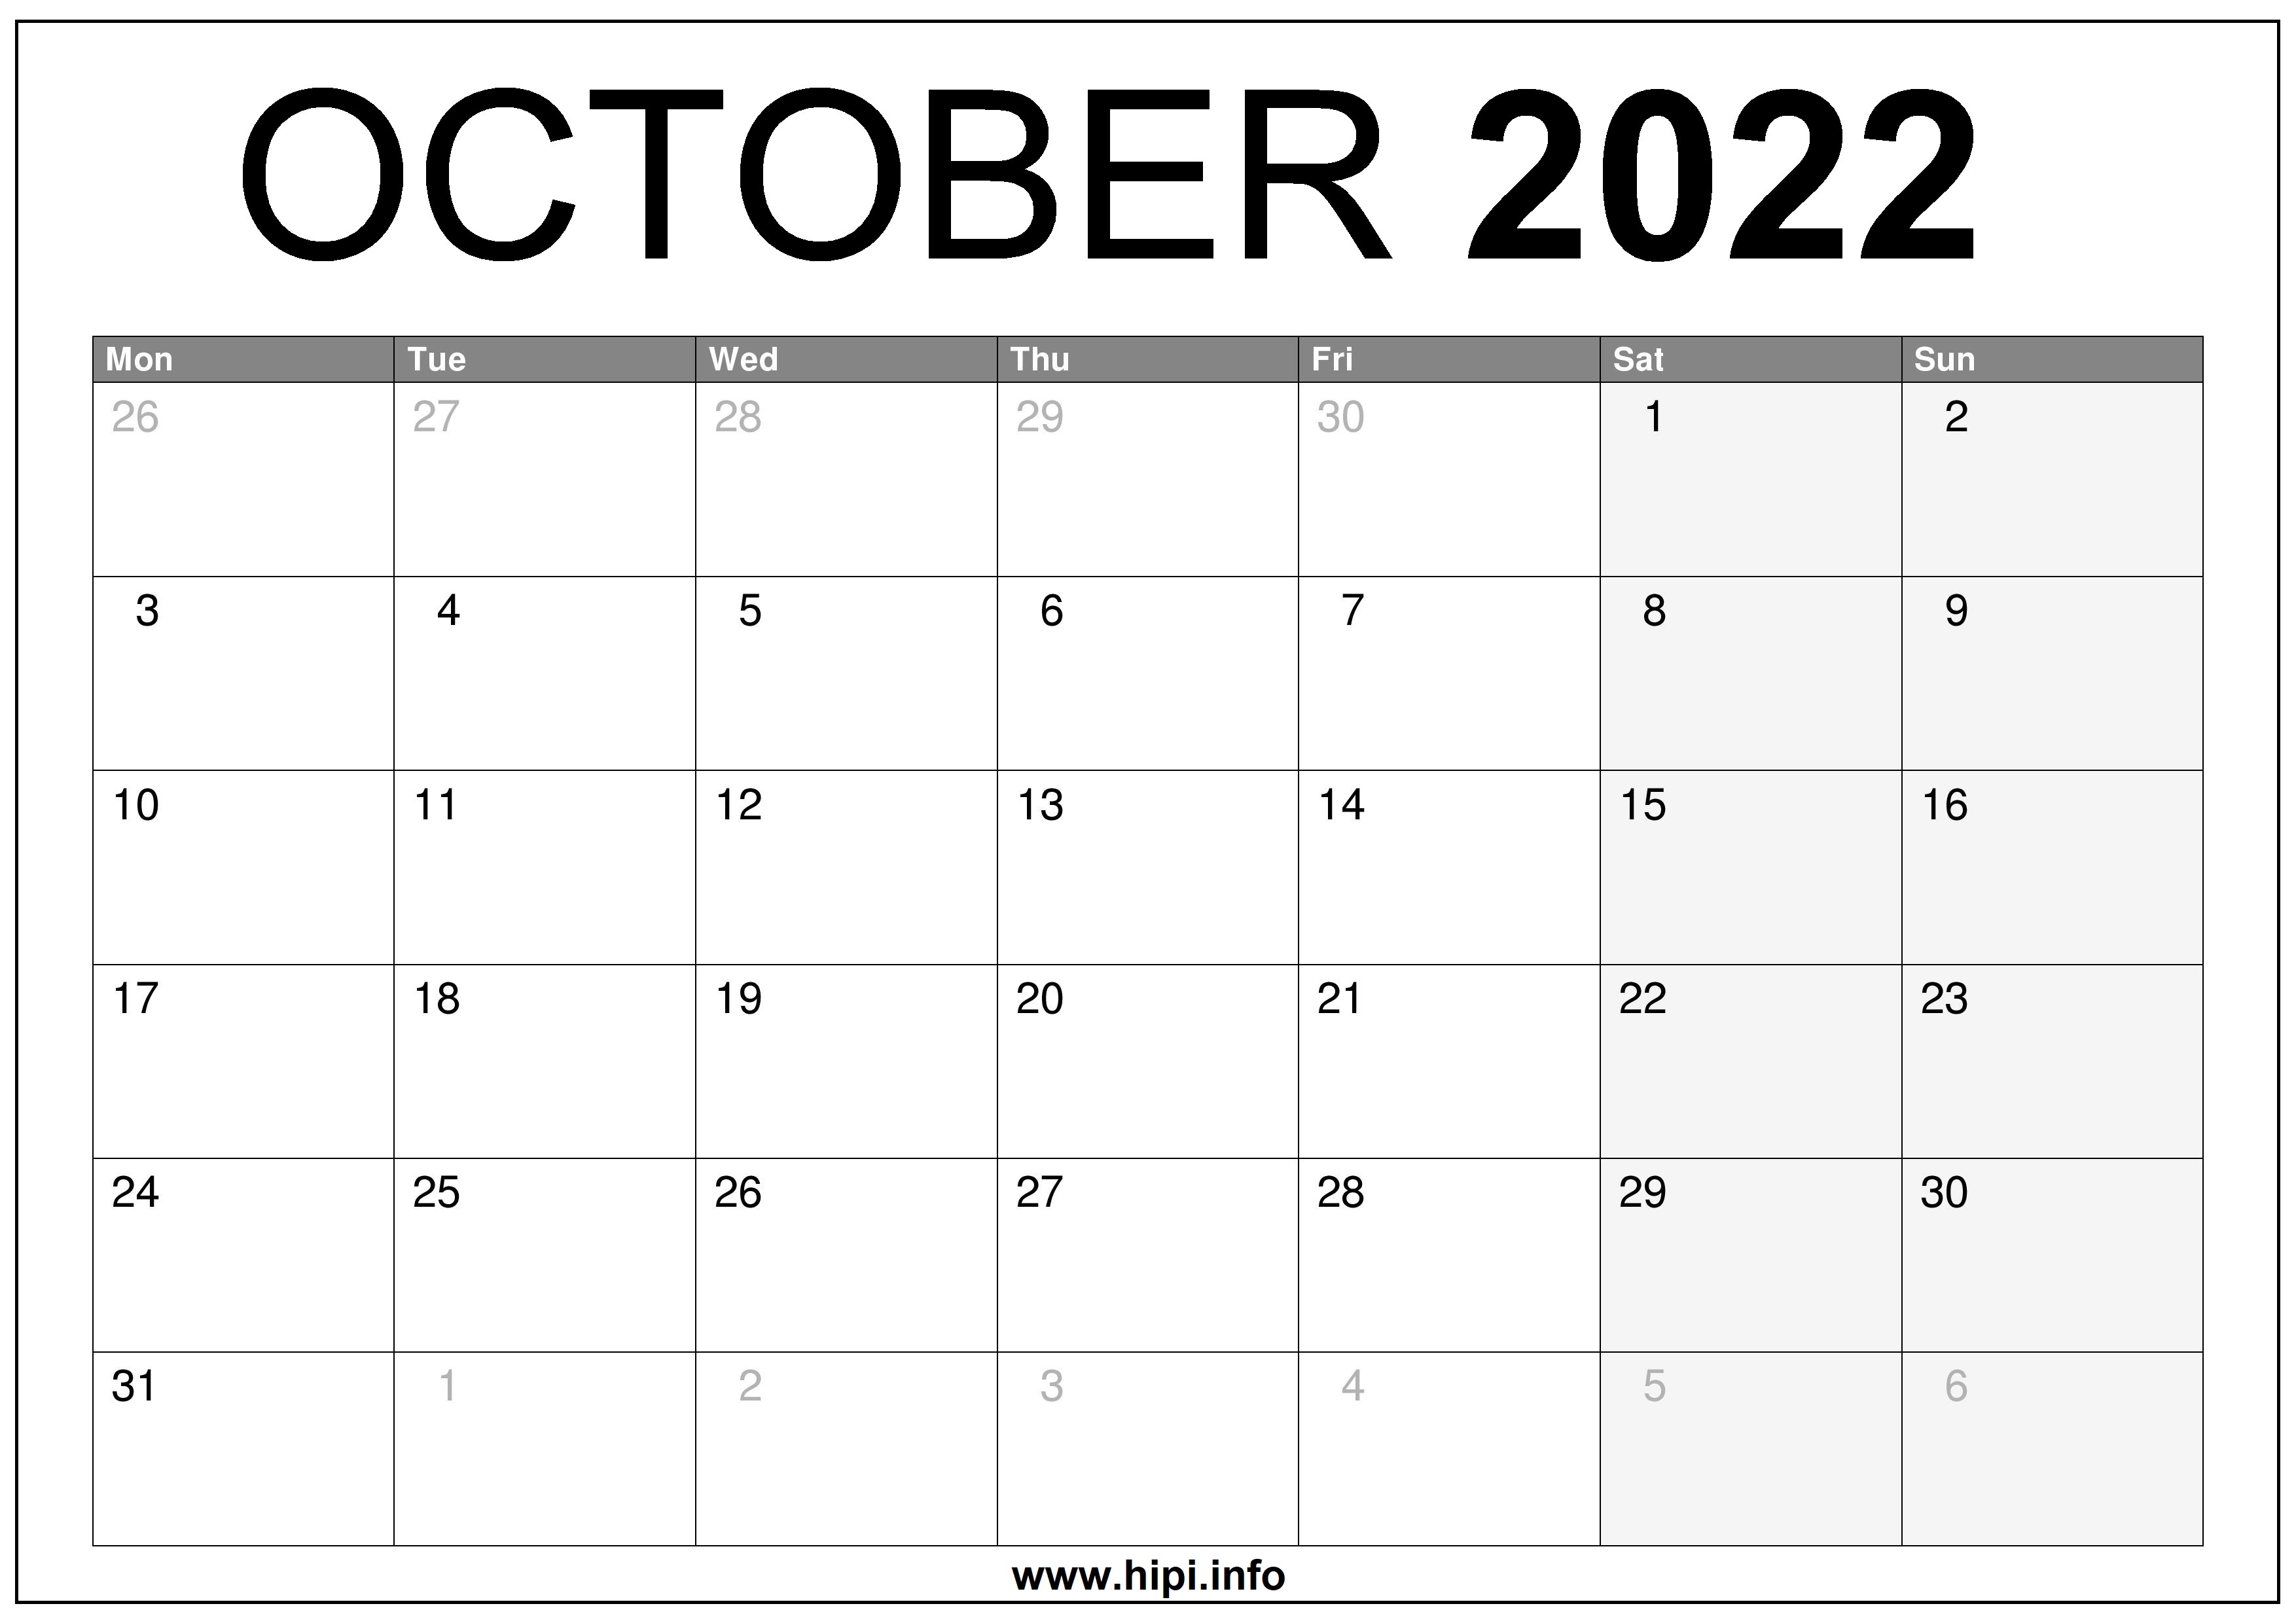 October Monthly Calendar 2022 October 2022 Uk Calendar Printable Free - Hipi.info | Calendars Printable  Free